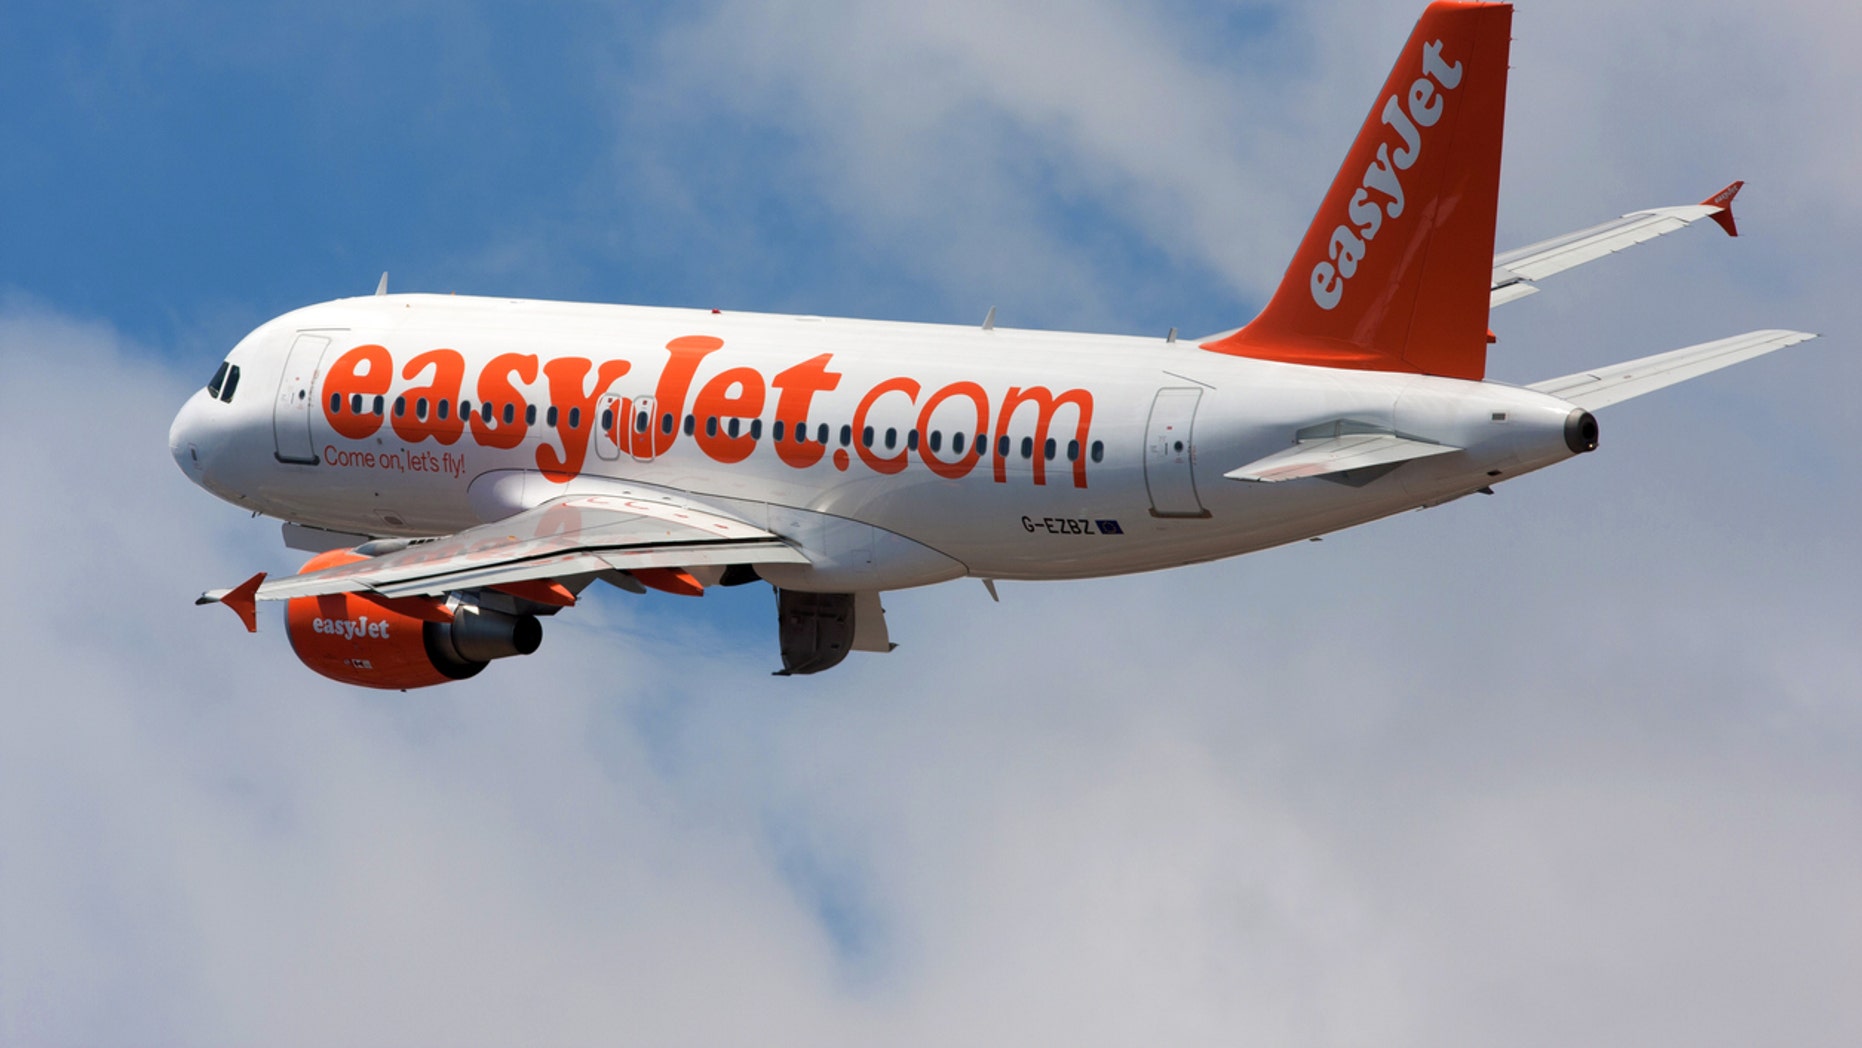 ‘Aggressive’ Easyjet passenger snaps phone in half, forces emergency landing